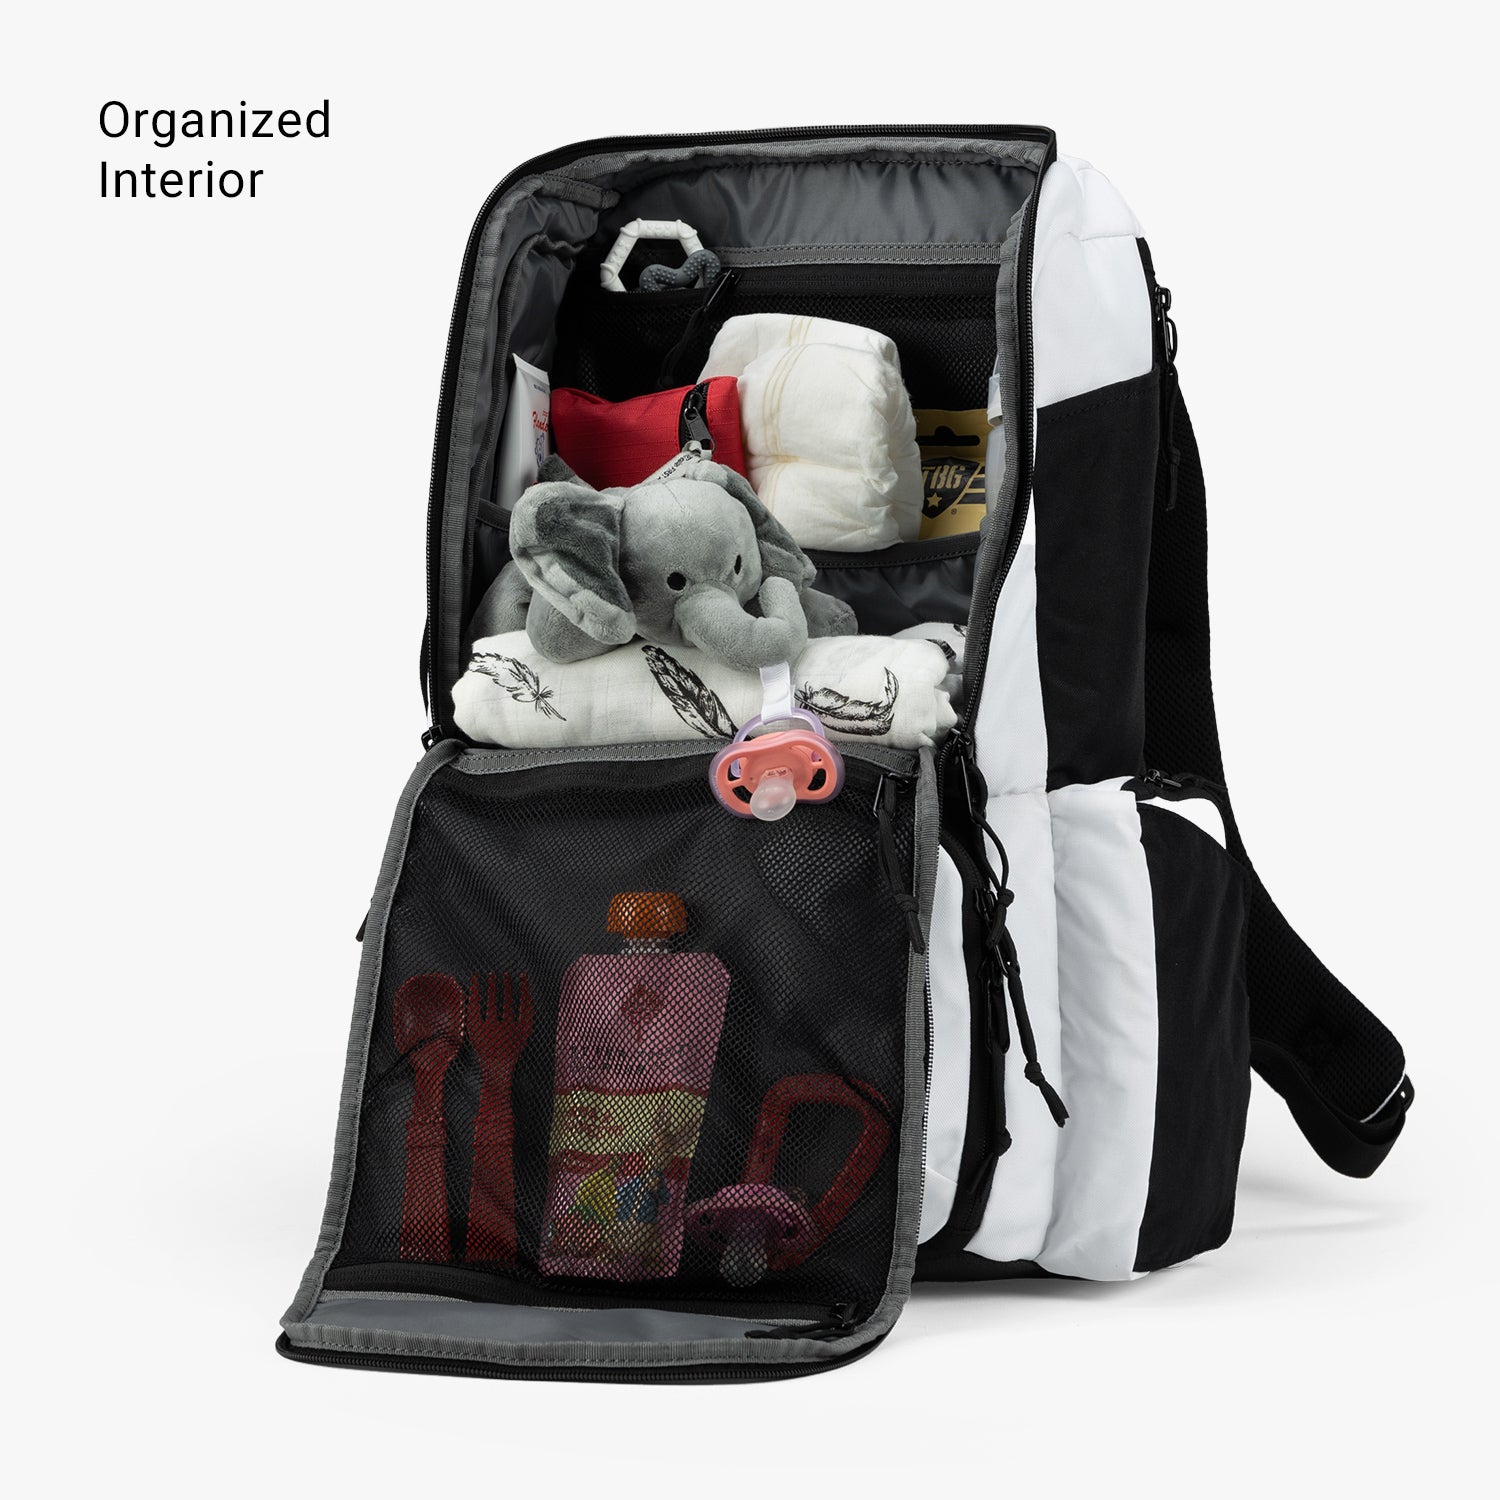 Expedition Diaper Bag